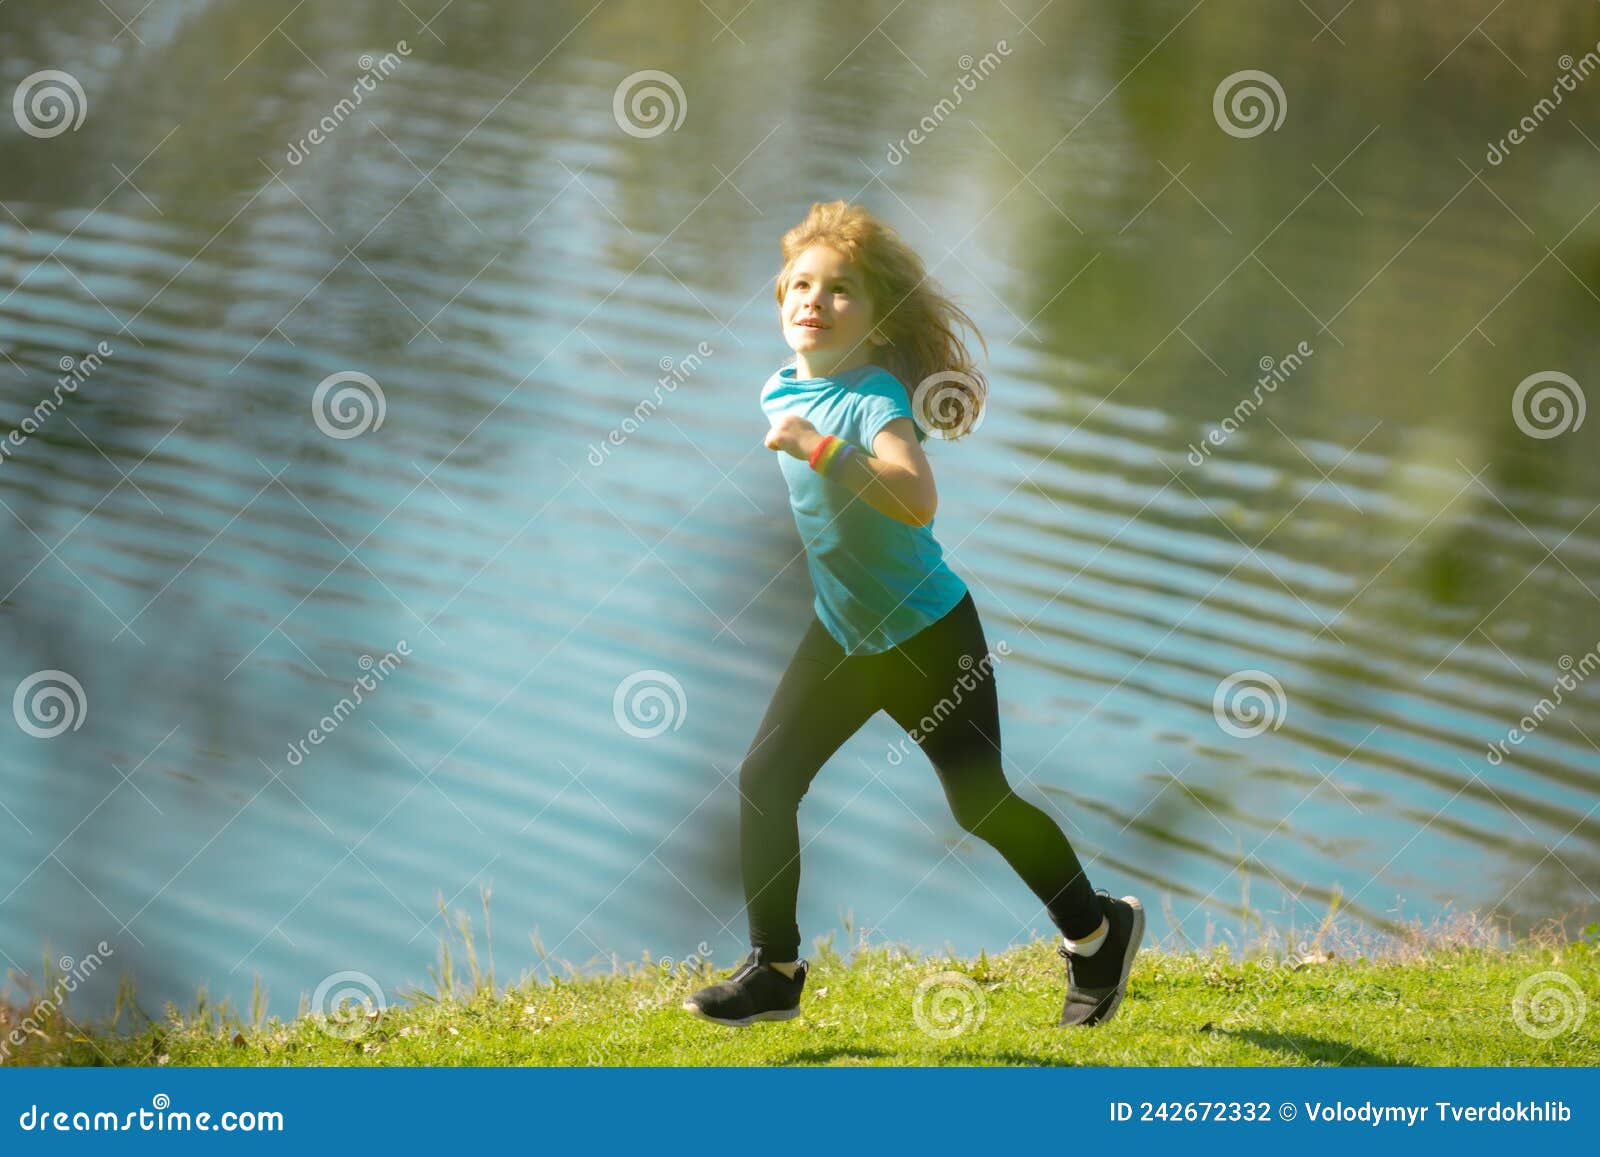 Child boy running or jogging near lake on grass in park. Sporty boy runner running in summer park. Active kids, sport children. Active energetic childhood